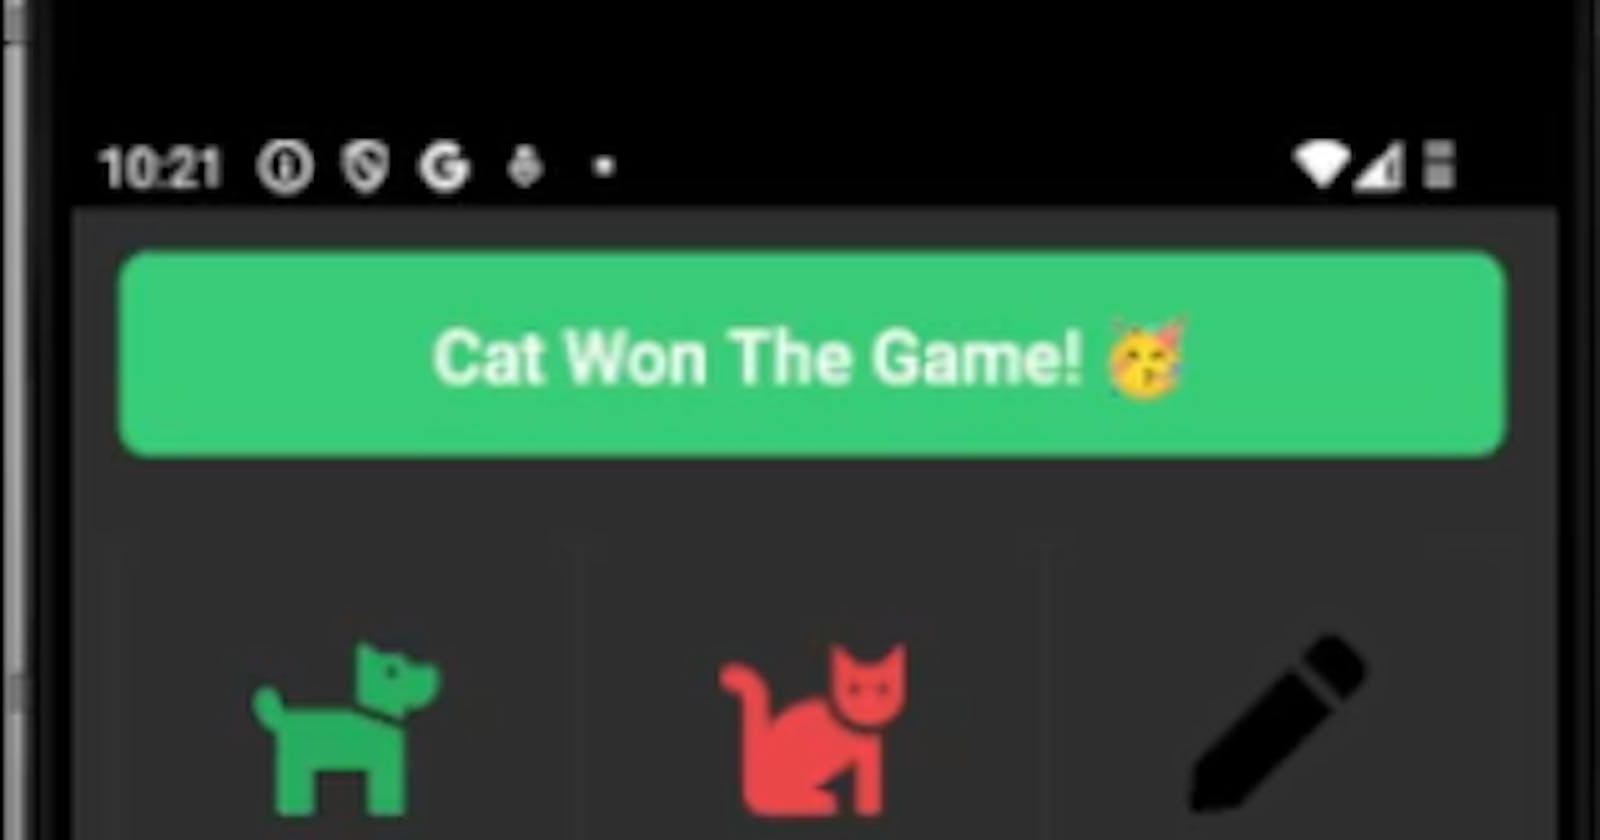 #react-native dogcatoe tic-tac-toe game app with a cat vs dog theme sounds- Apk con una temática de gato contra perro con sonidos.